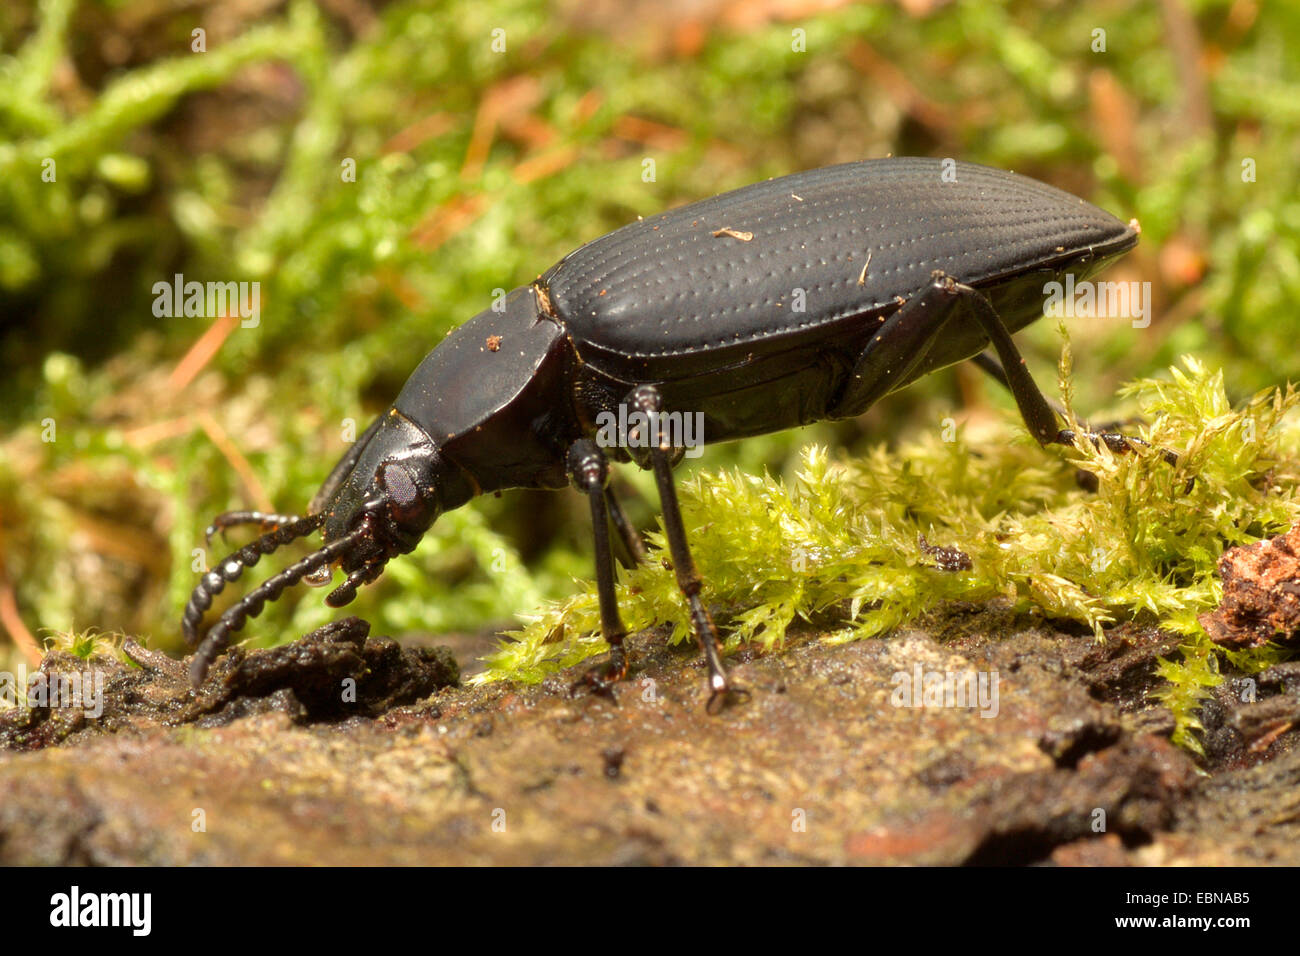 Kingworm, Superworm, Darkling Beetle (Zophobas morio), side view Banque D'Images